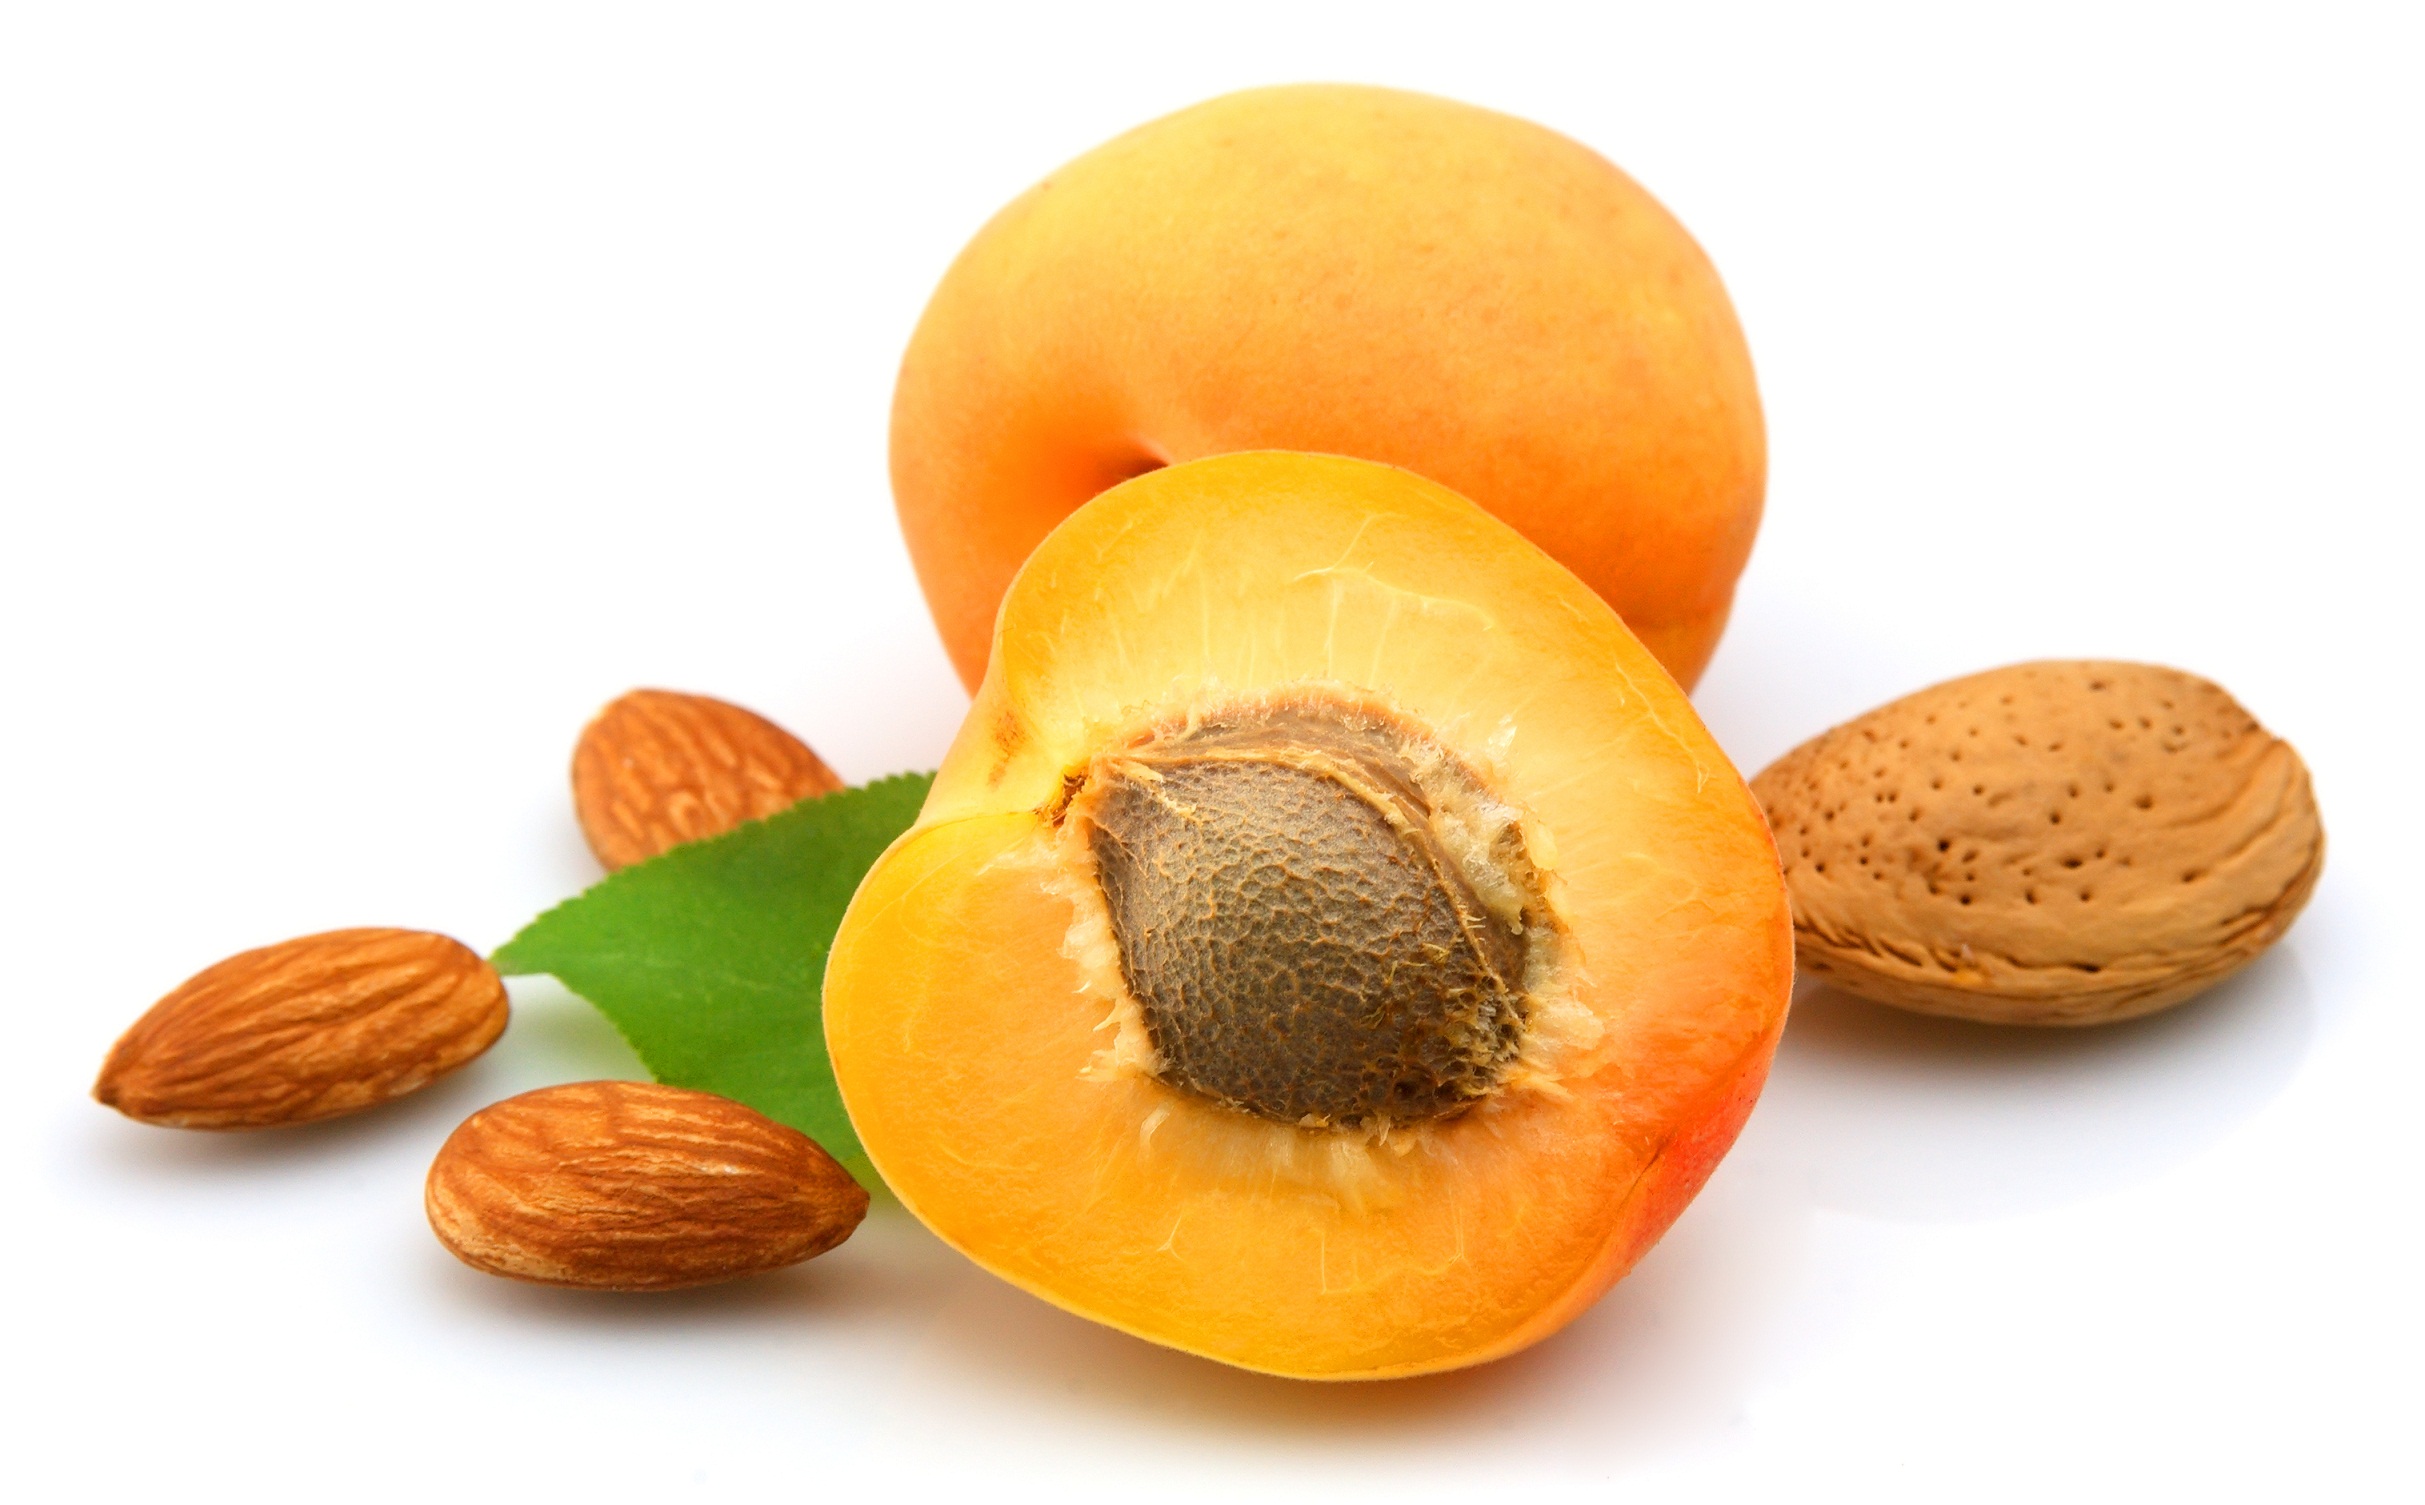 Apricot seeds